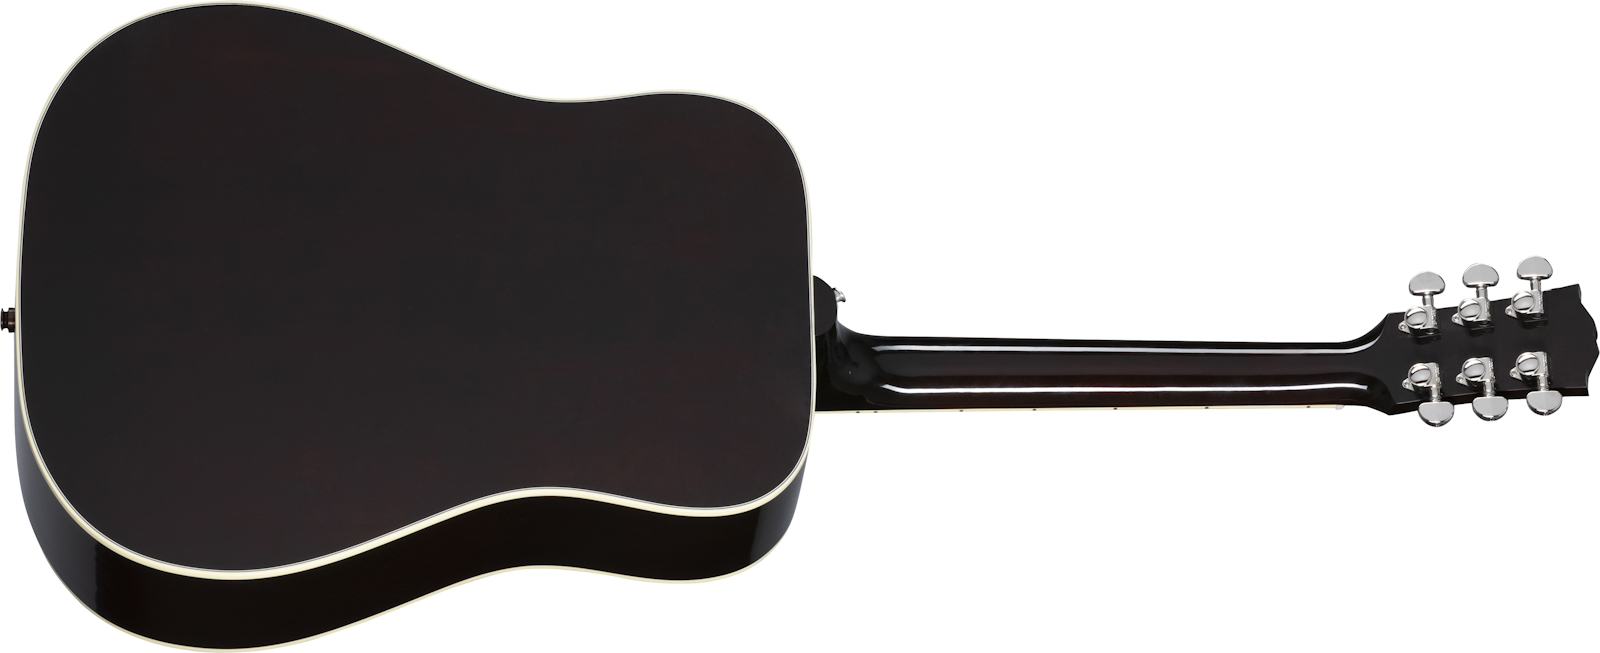 Gibson Hummingbird Standard Modern Lh Dreadnought Gaucher Epicea Acajou Rw - Vintage Sunburst - Linkshandige folkgitaar - Variation 1